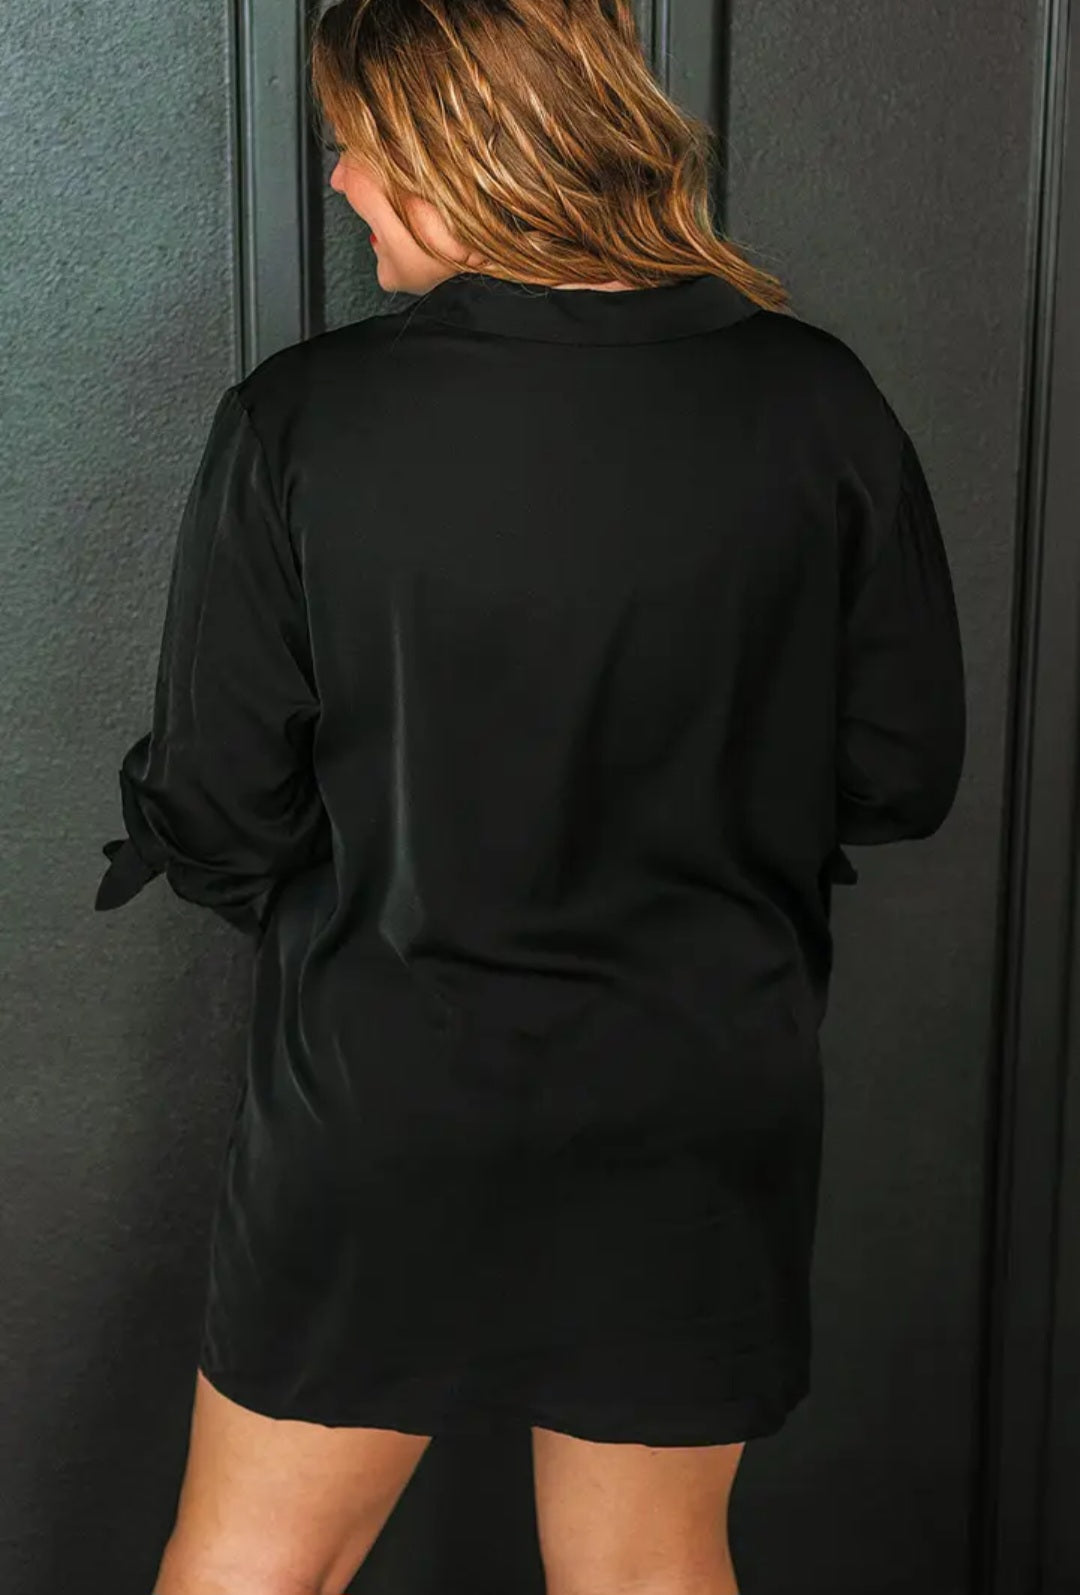 Black Plus Size Tie Cuffs V Neck Shirt Dress